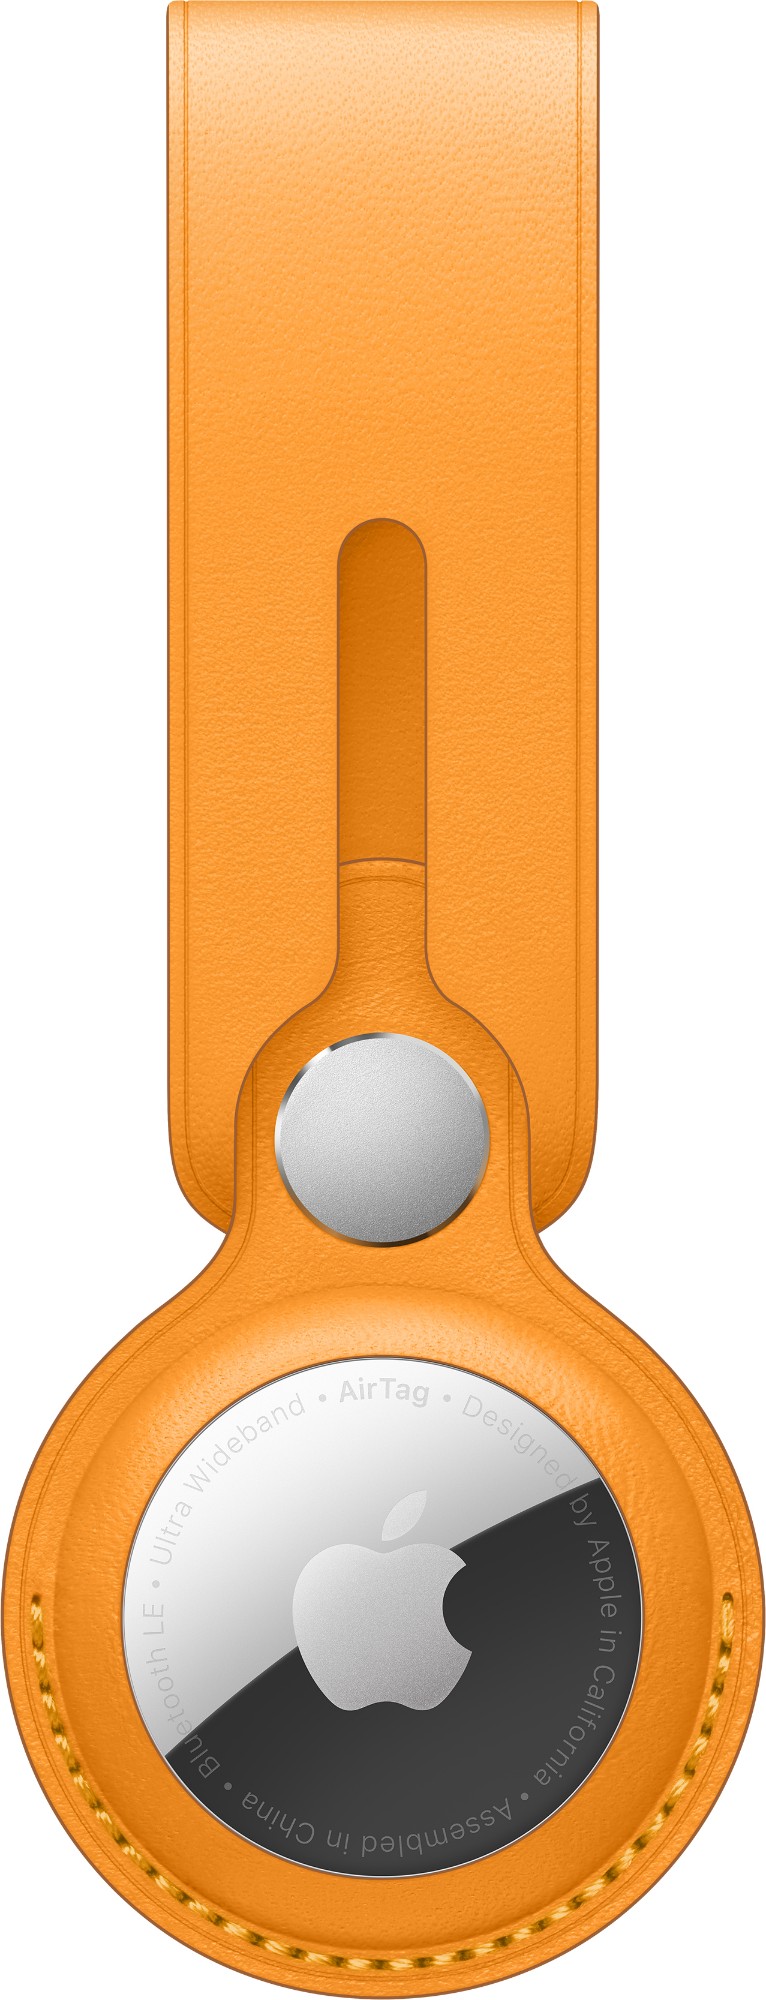 Apple MM023ZM/A key finder accessory Key finder case Yellow